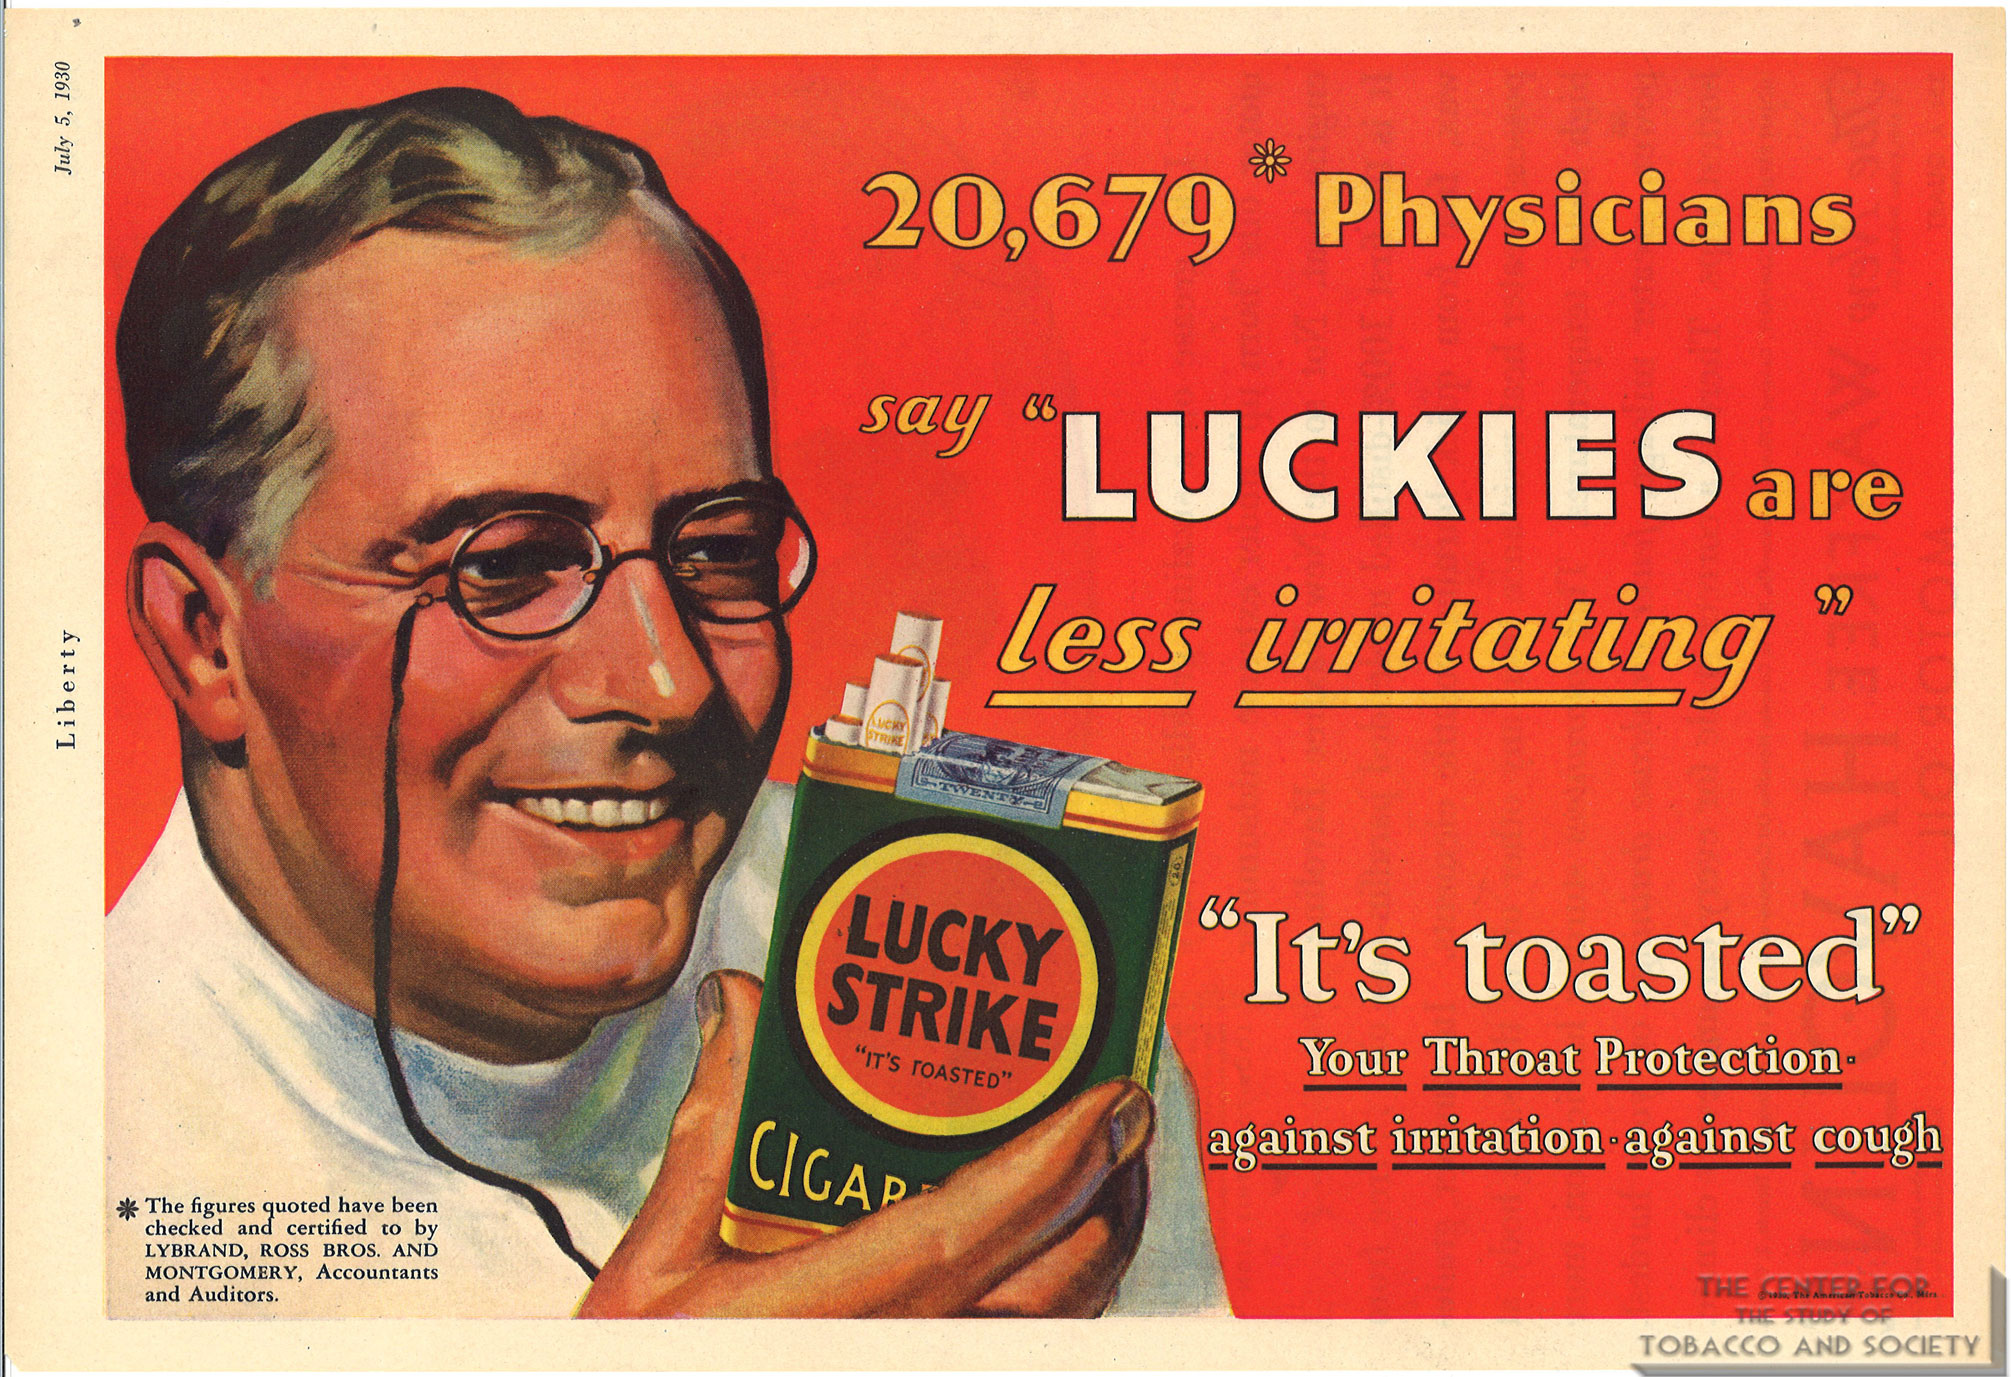 1920s Smoking Advertisements